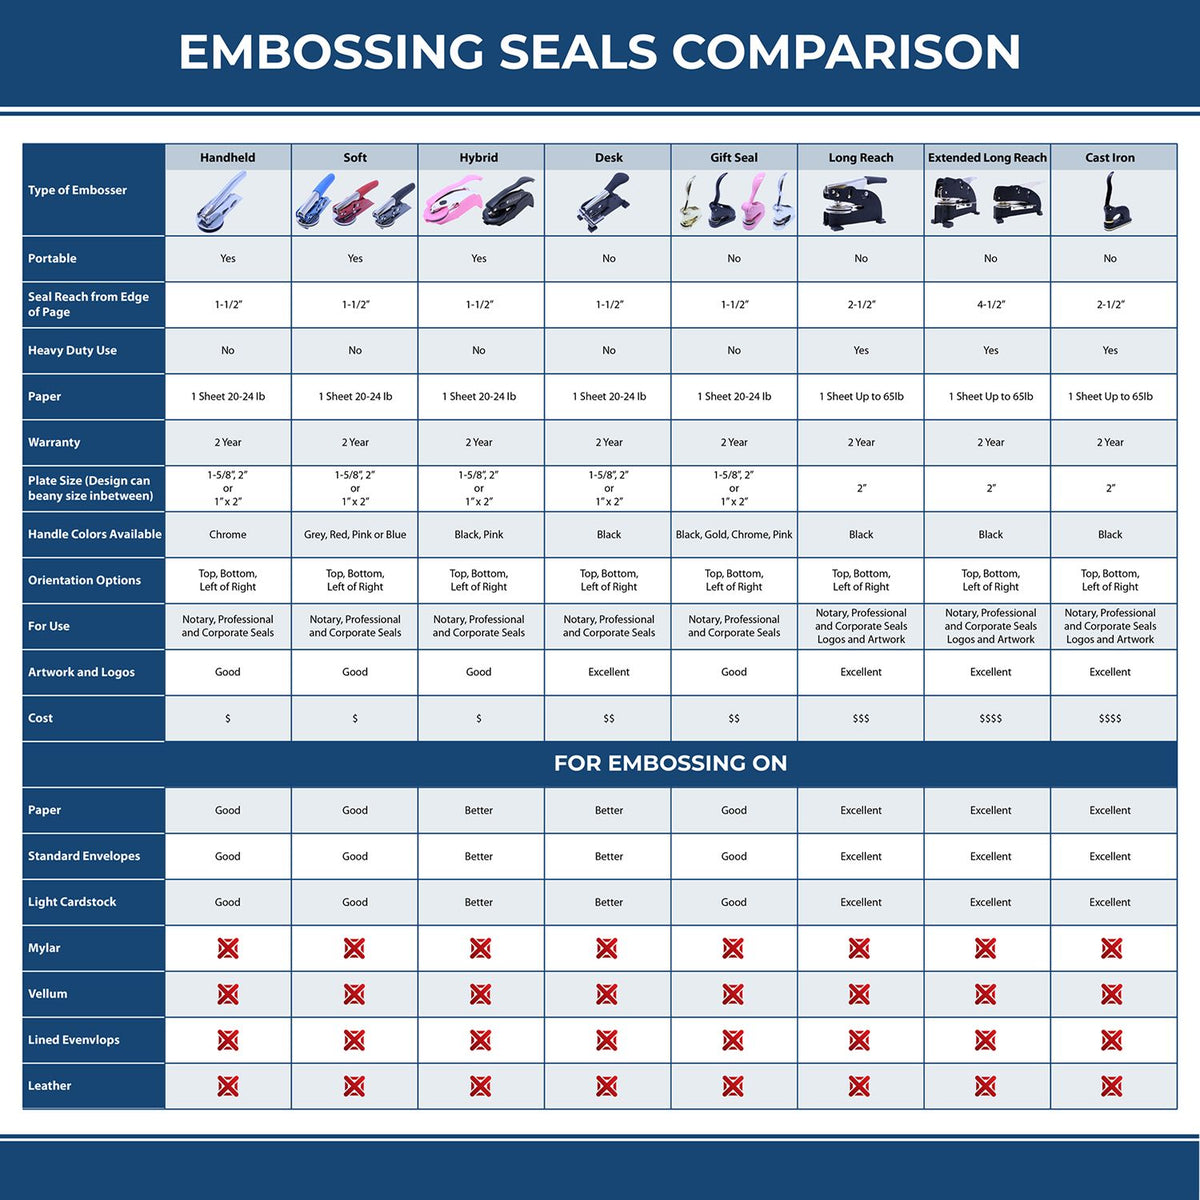 Public Weighmaster Cast Iron Desk Seal Embosser 3027WE Embossing Seal Comparison